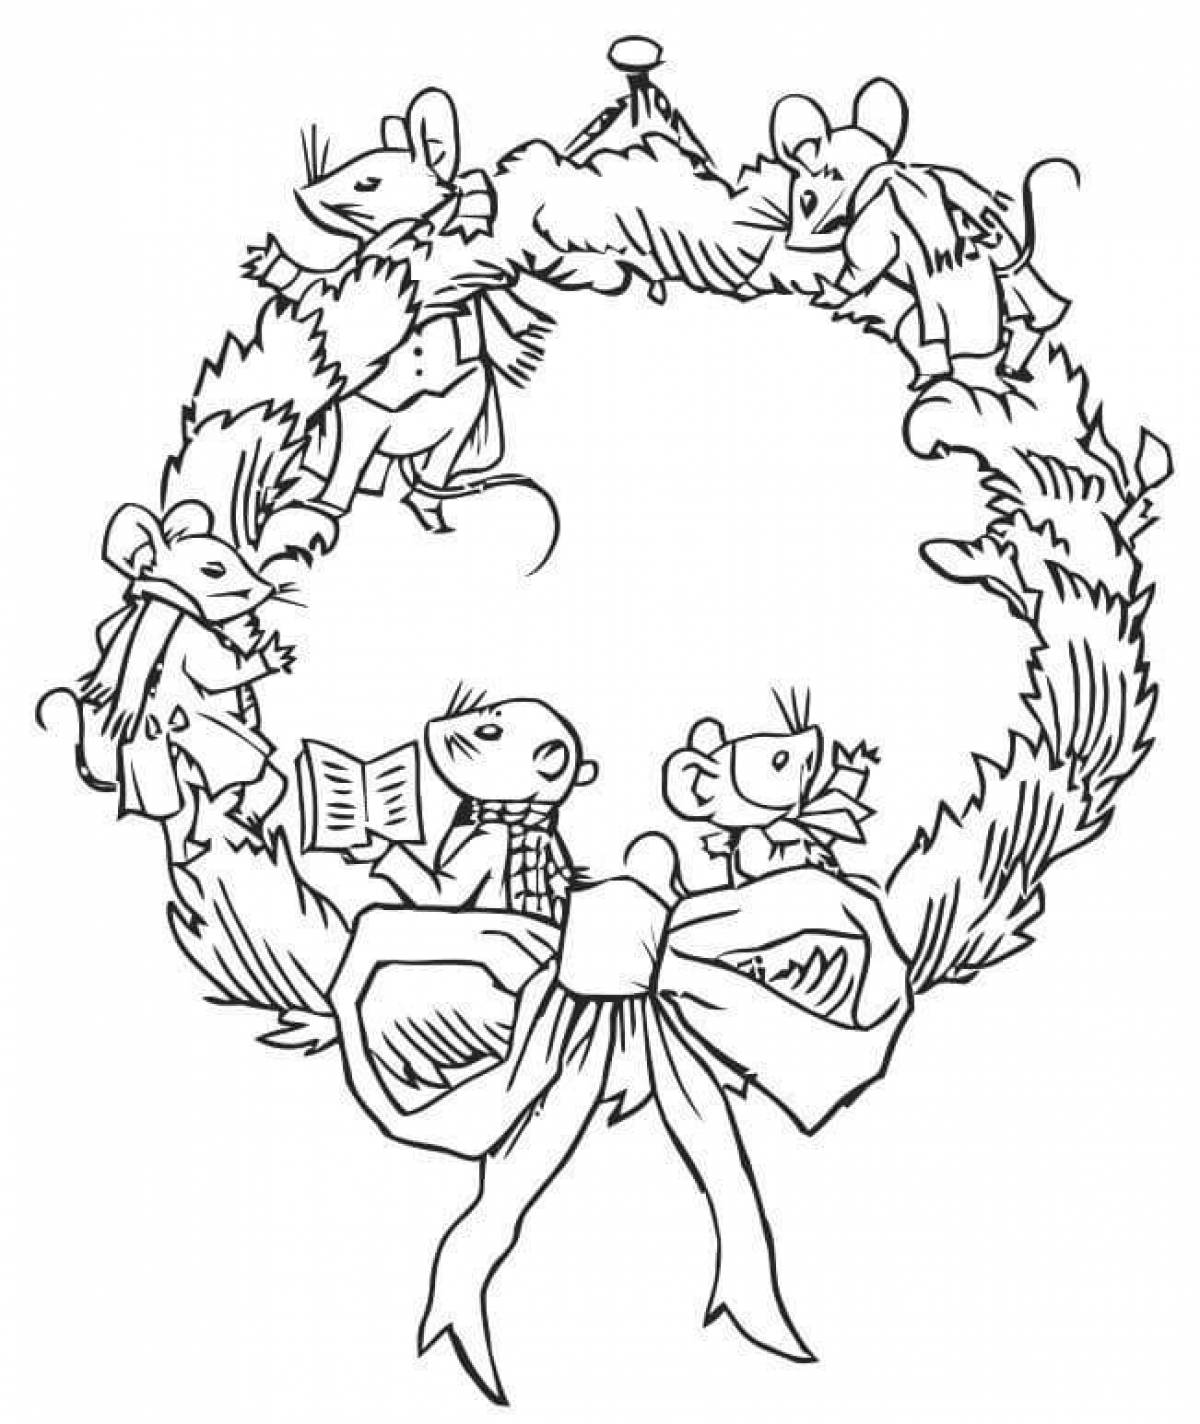 Humorous Christmas wreath coloring book